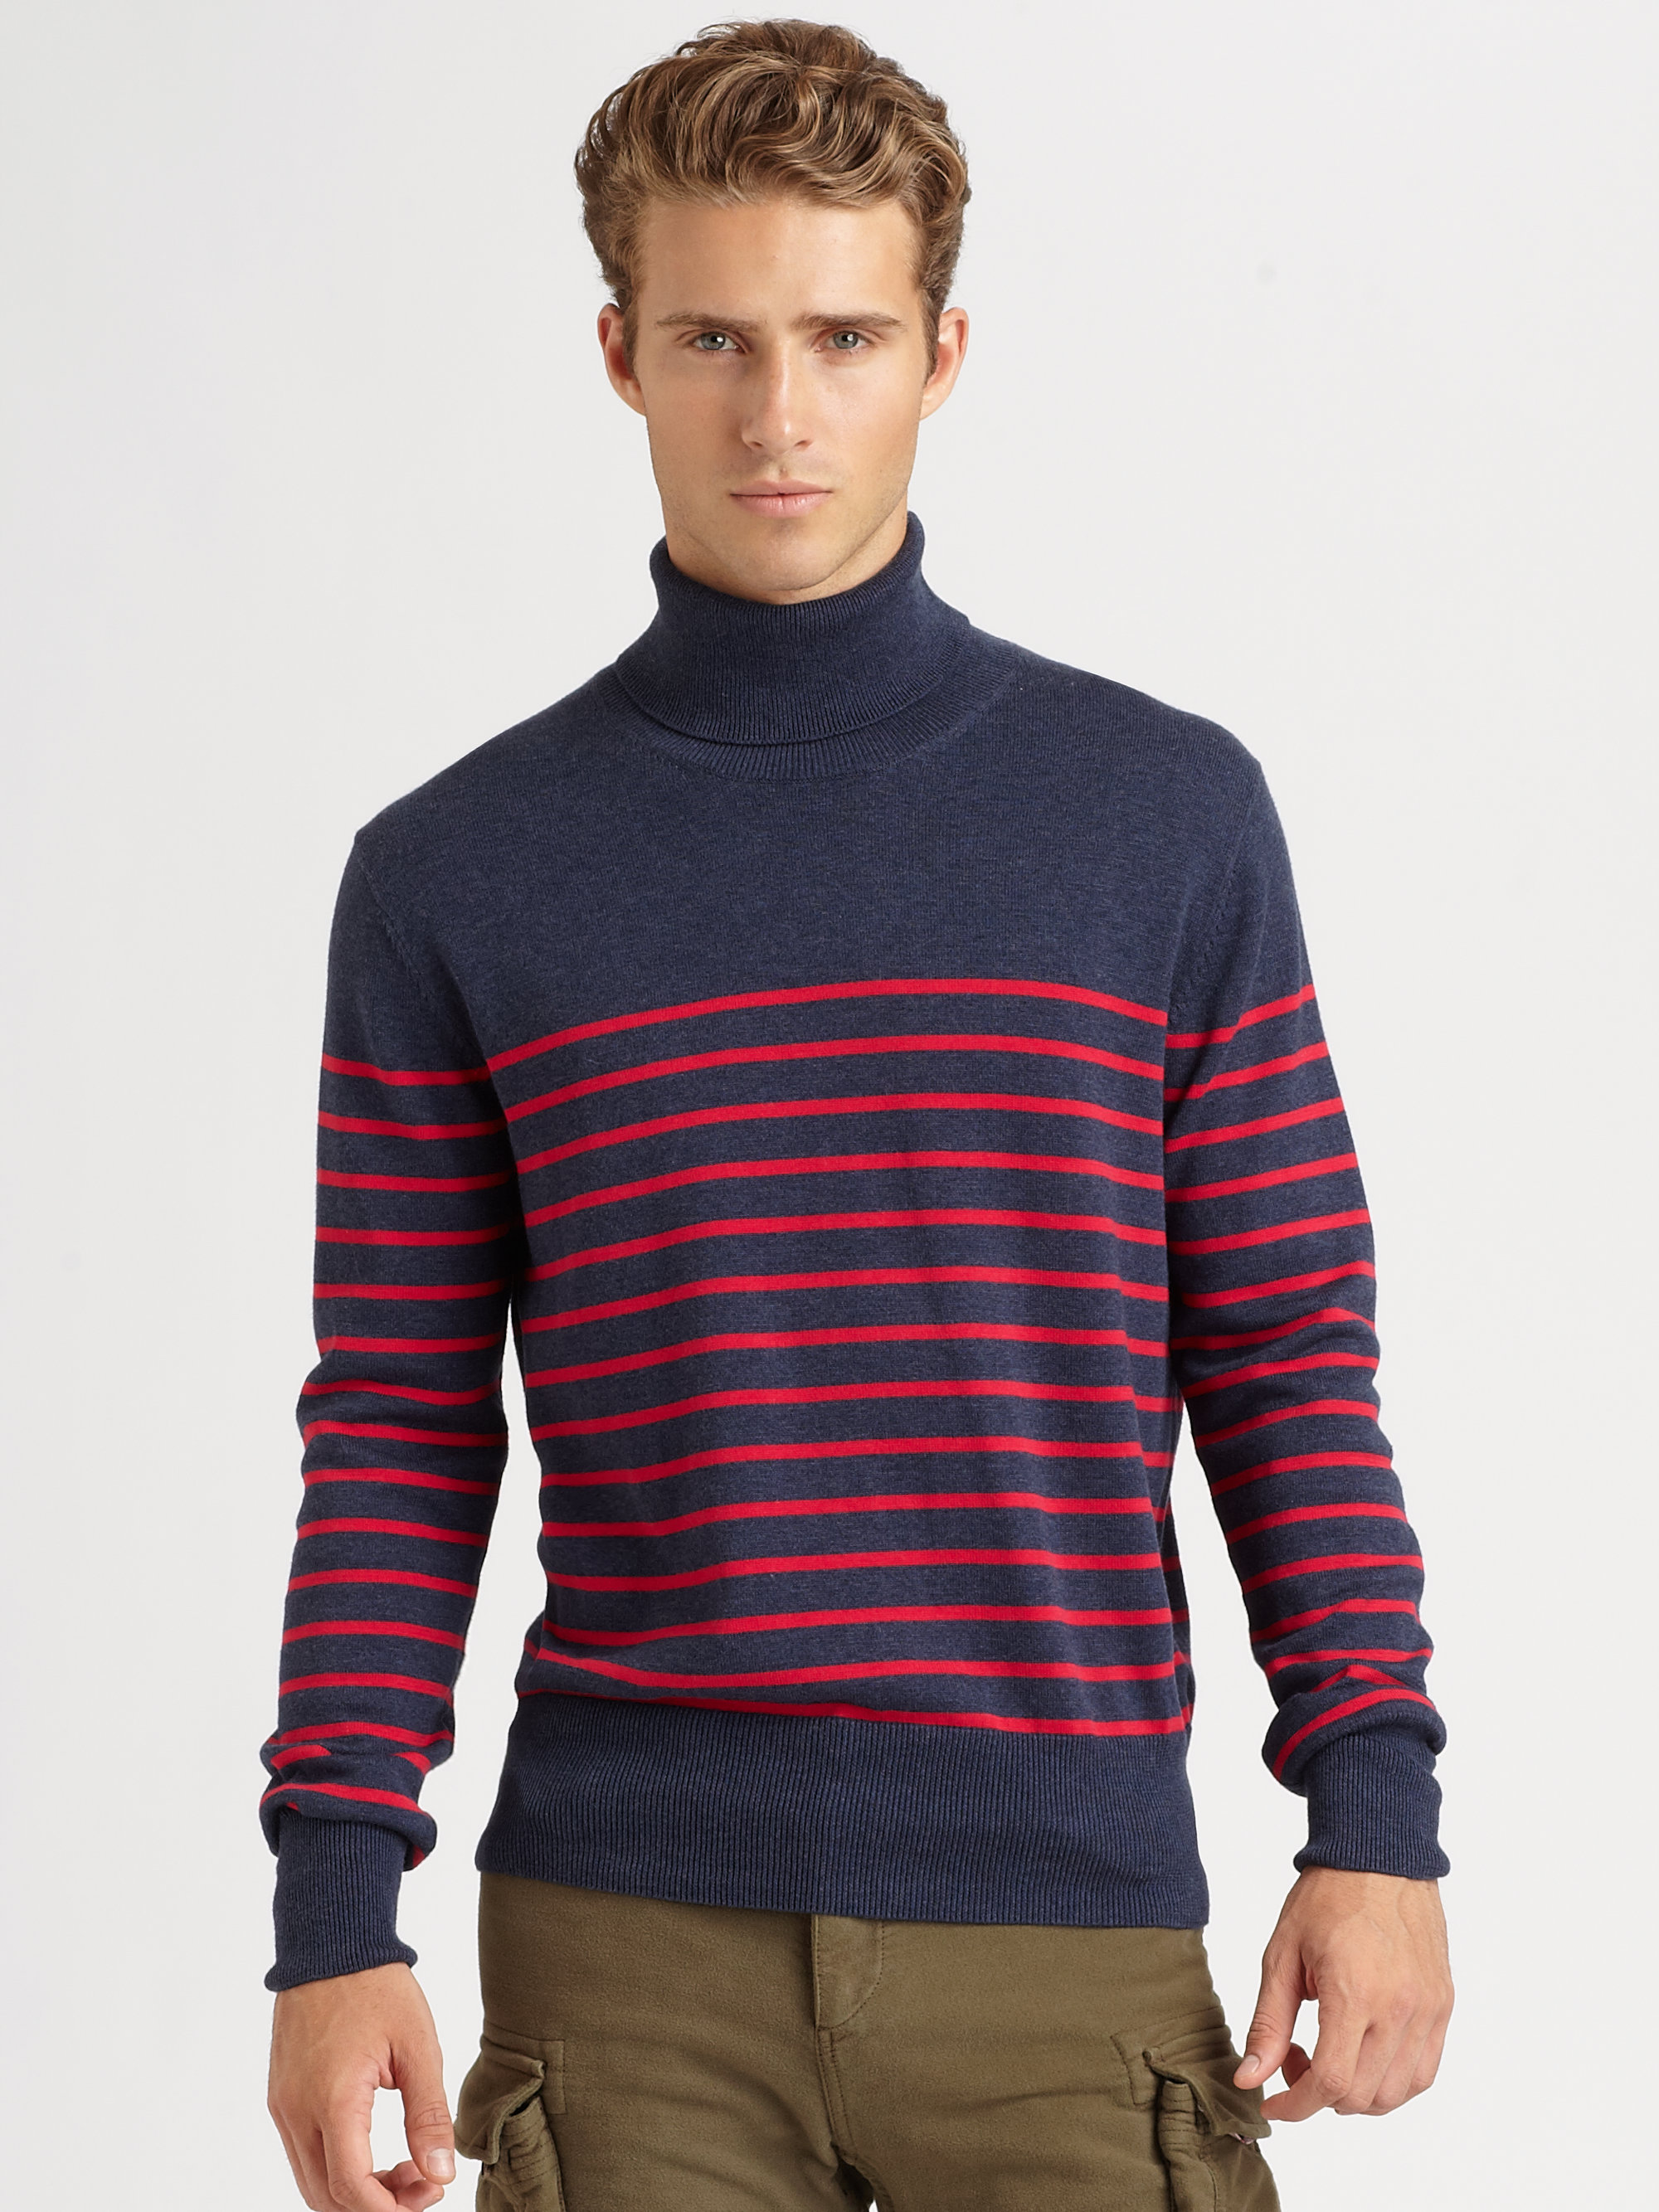 Lyst - Gant Striped Turtleneck Sweater in Blue for Men